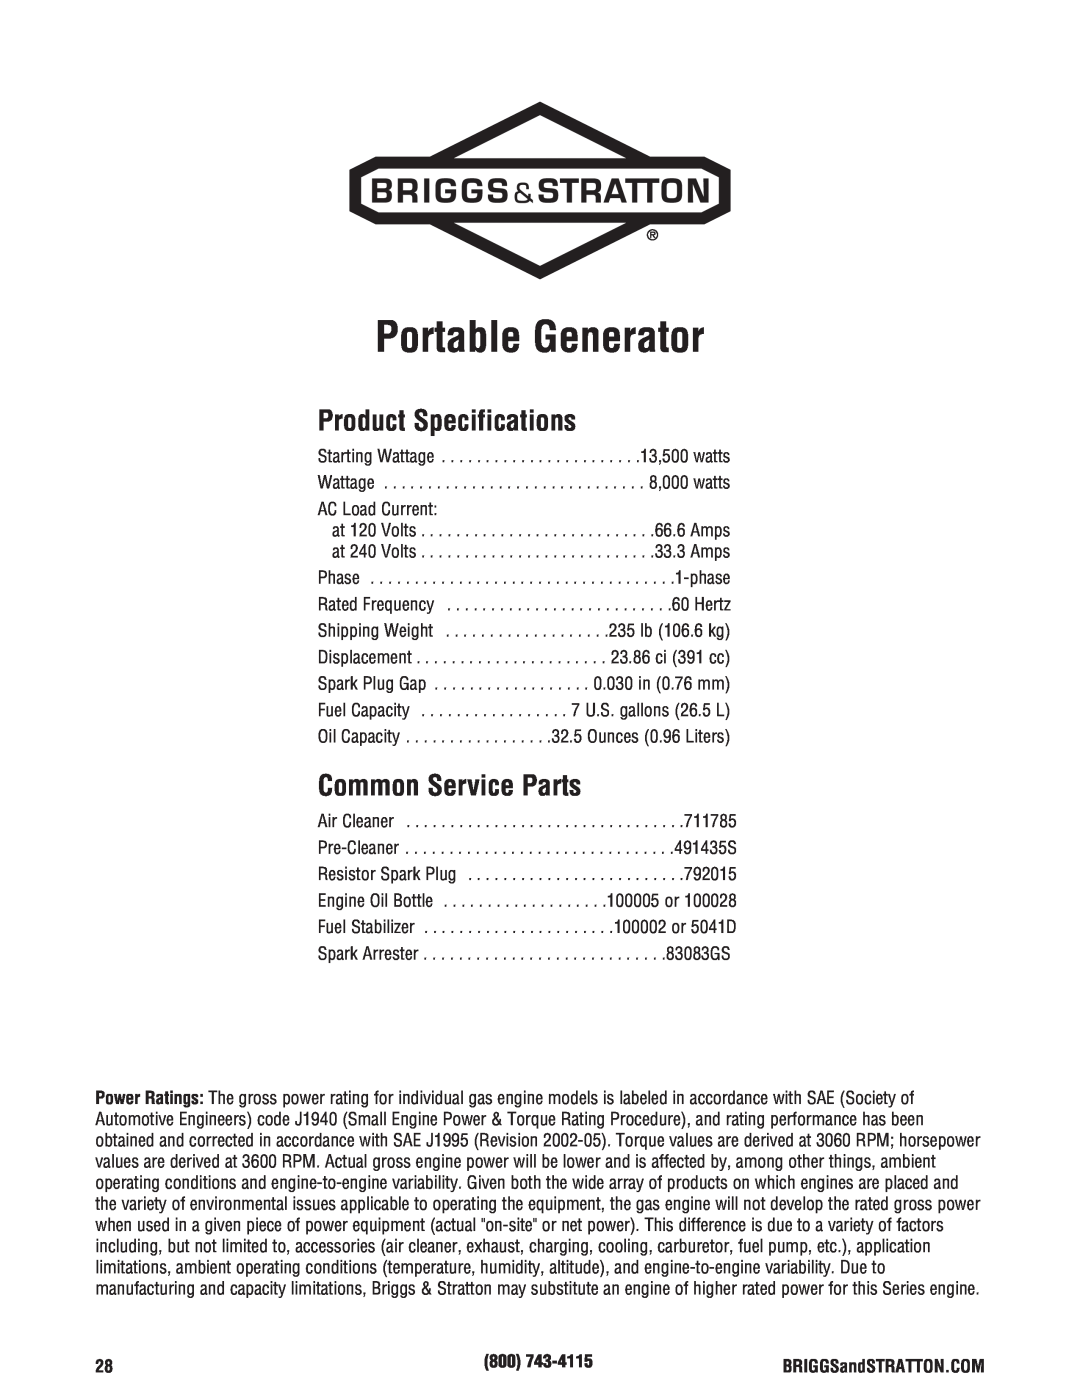 Briggs & Stratton 13500 manual Portable Generator, Product Specifications, Common Service Parts 